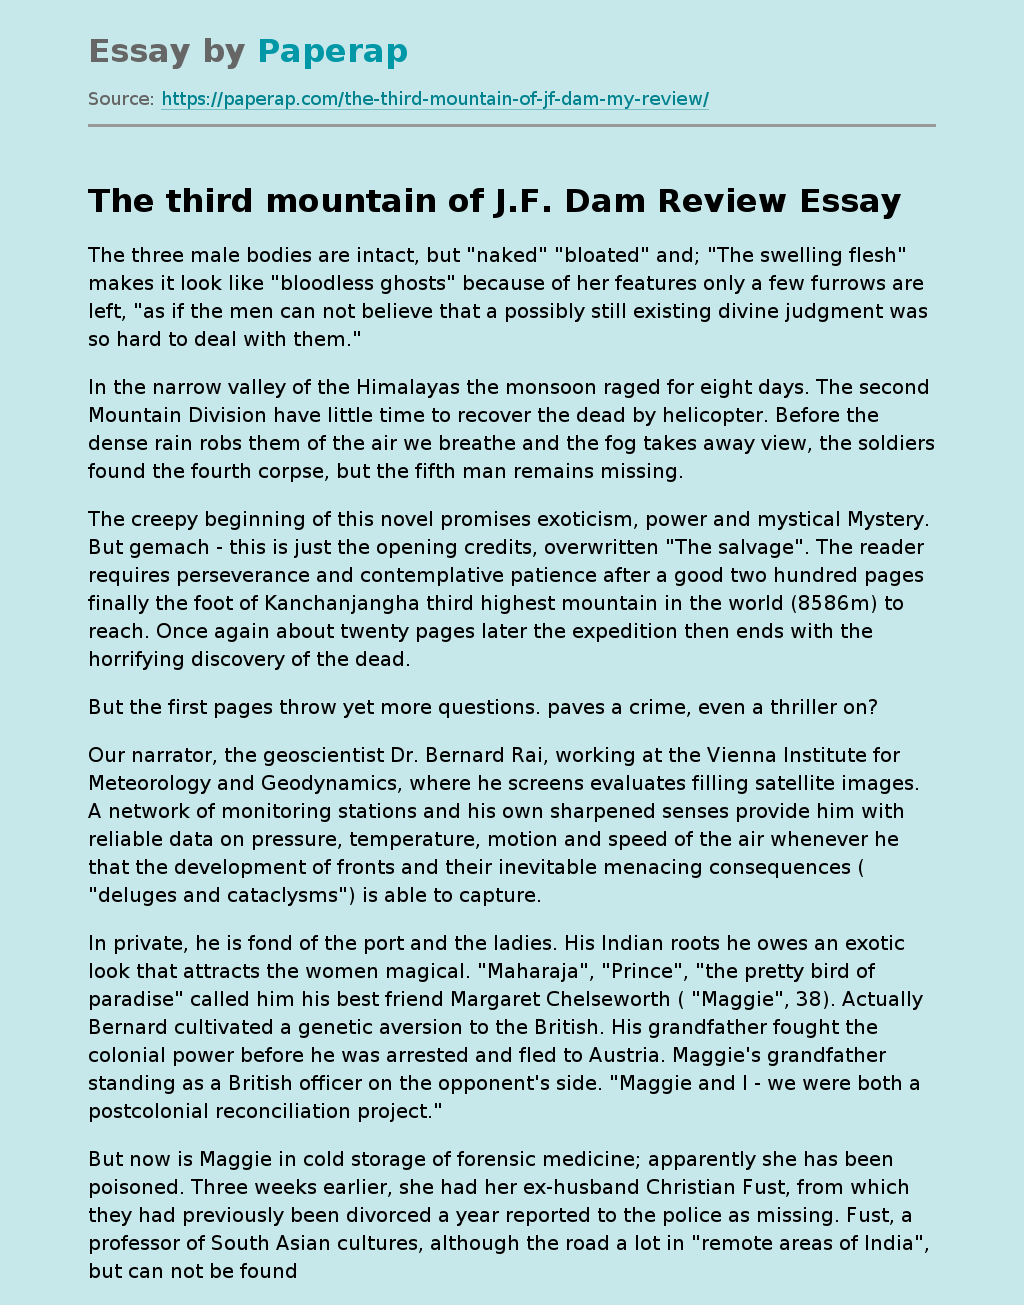 “The Third Mountain” of J.f. Dam